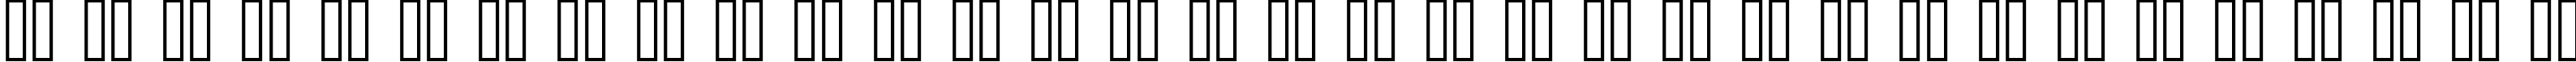 Пример написания русского алфавита шрифтом Knuckle Sandwich Italic